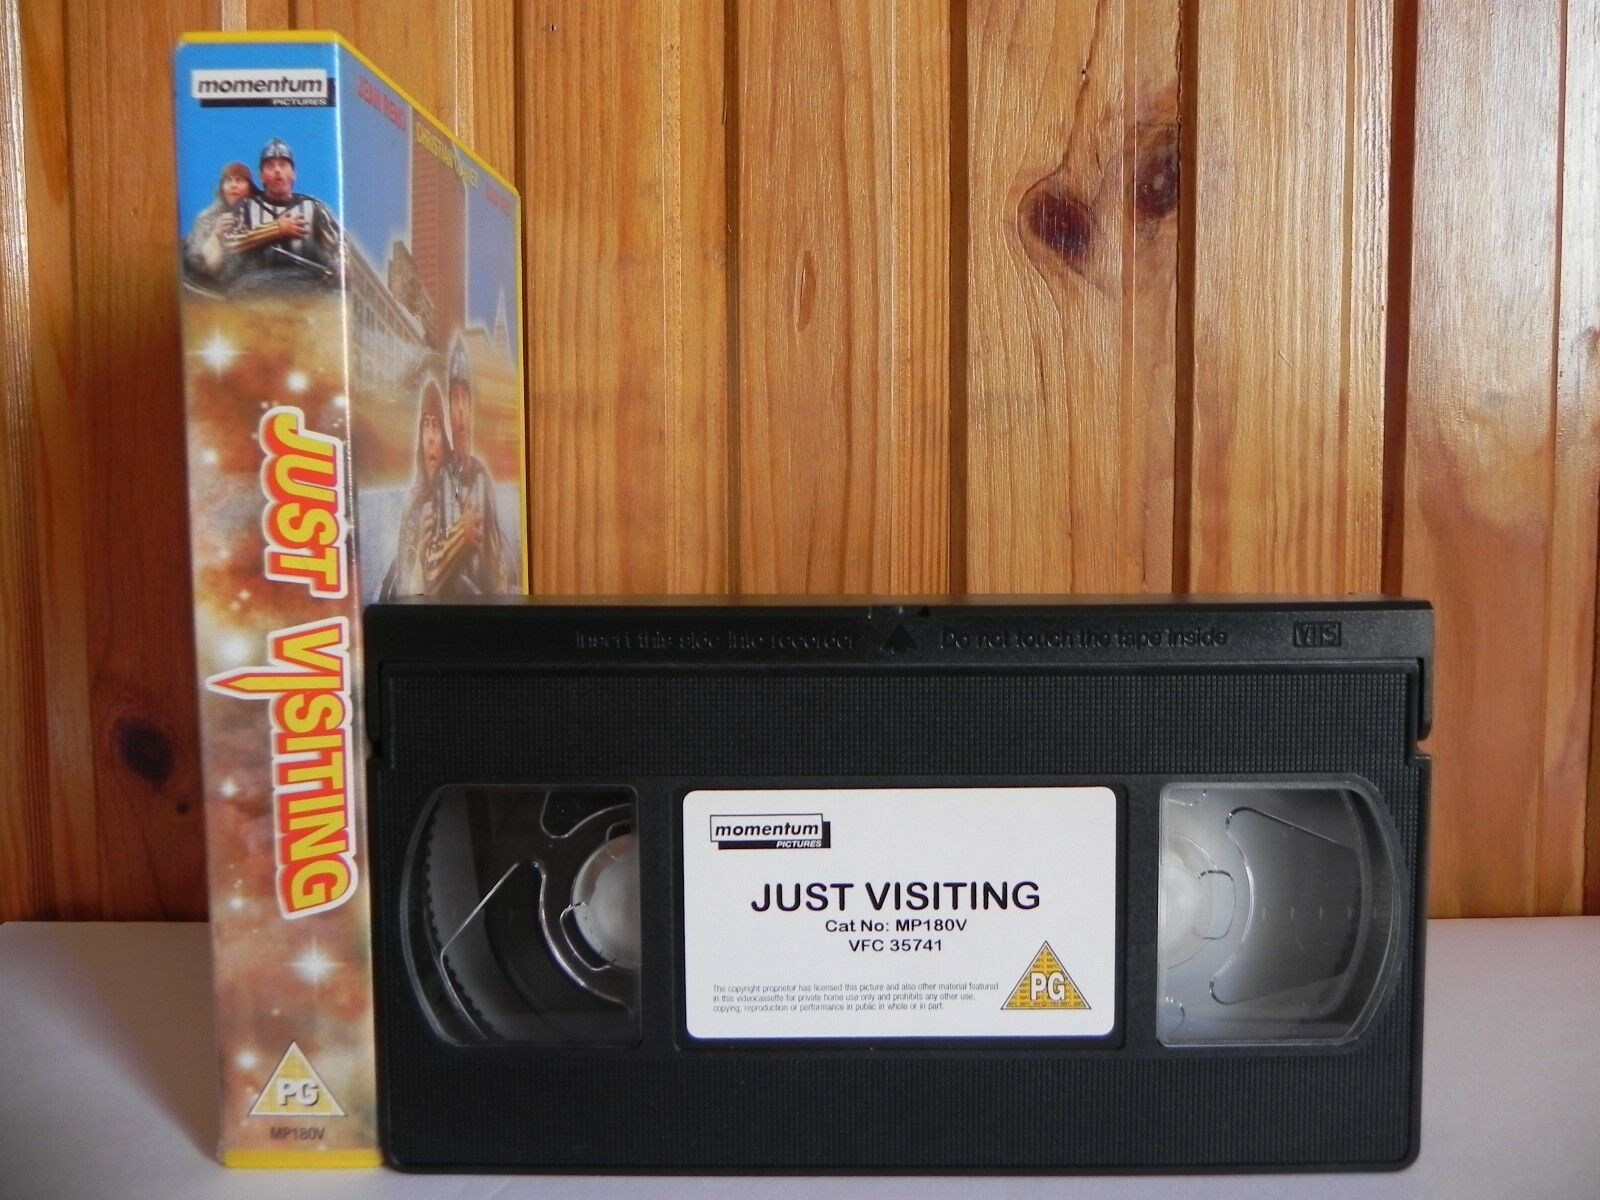 Just Visiting - Momentum - Comedy - Jean Reno - Christina Applegate - Pal VHS-